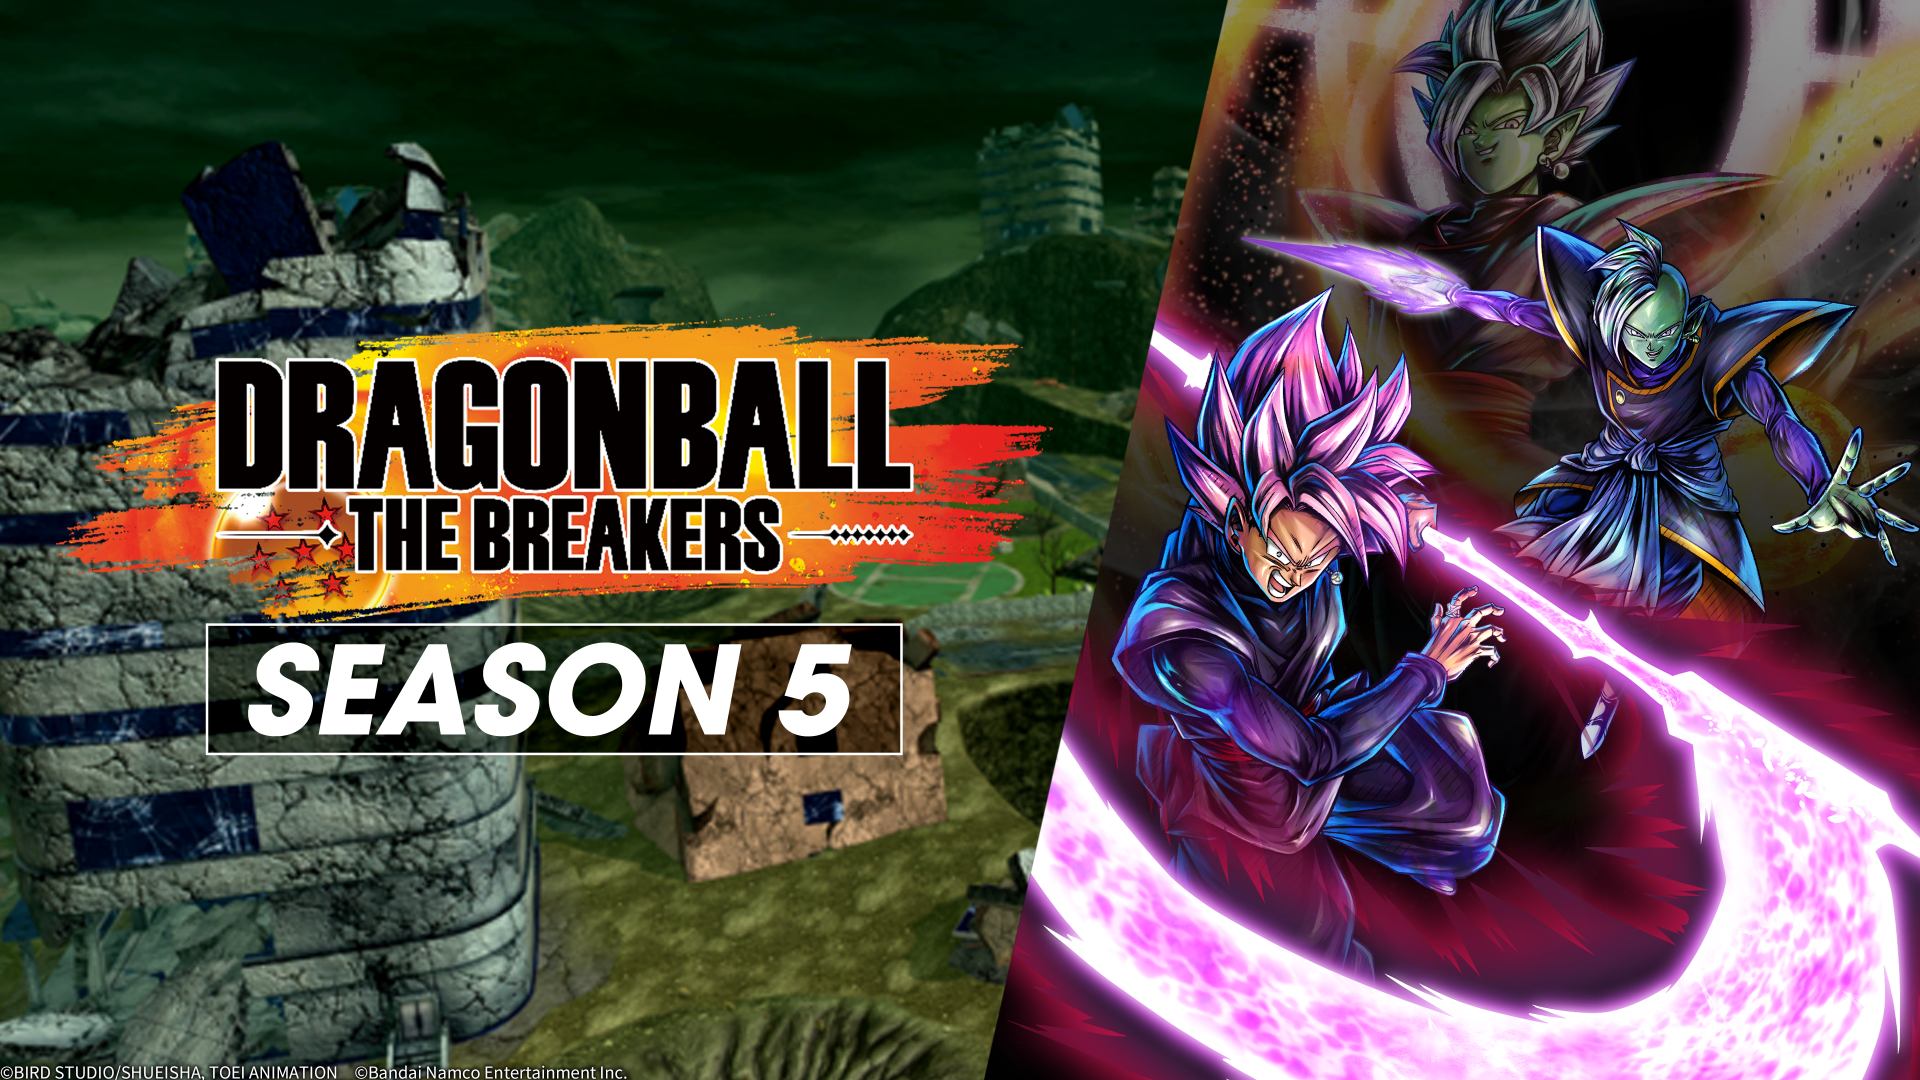 Pre-order for Time Breaker Goku Black releasing soon! 3 different